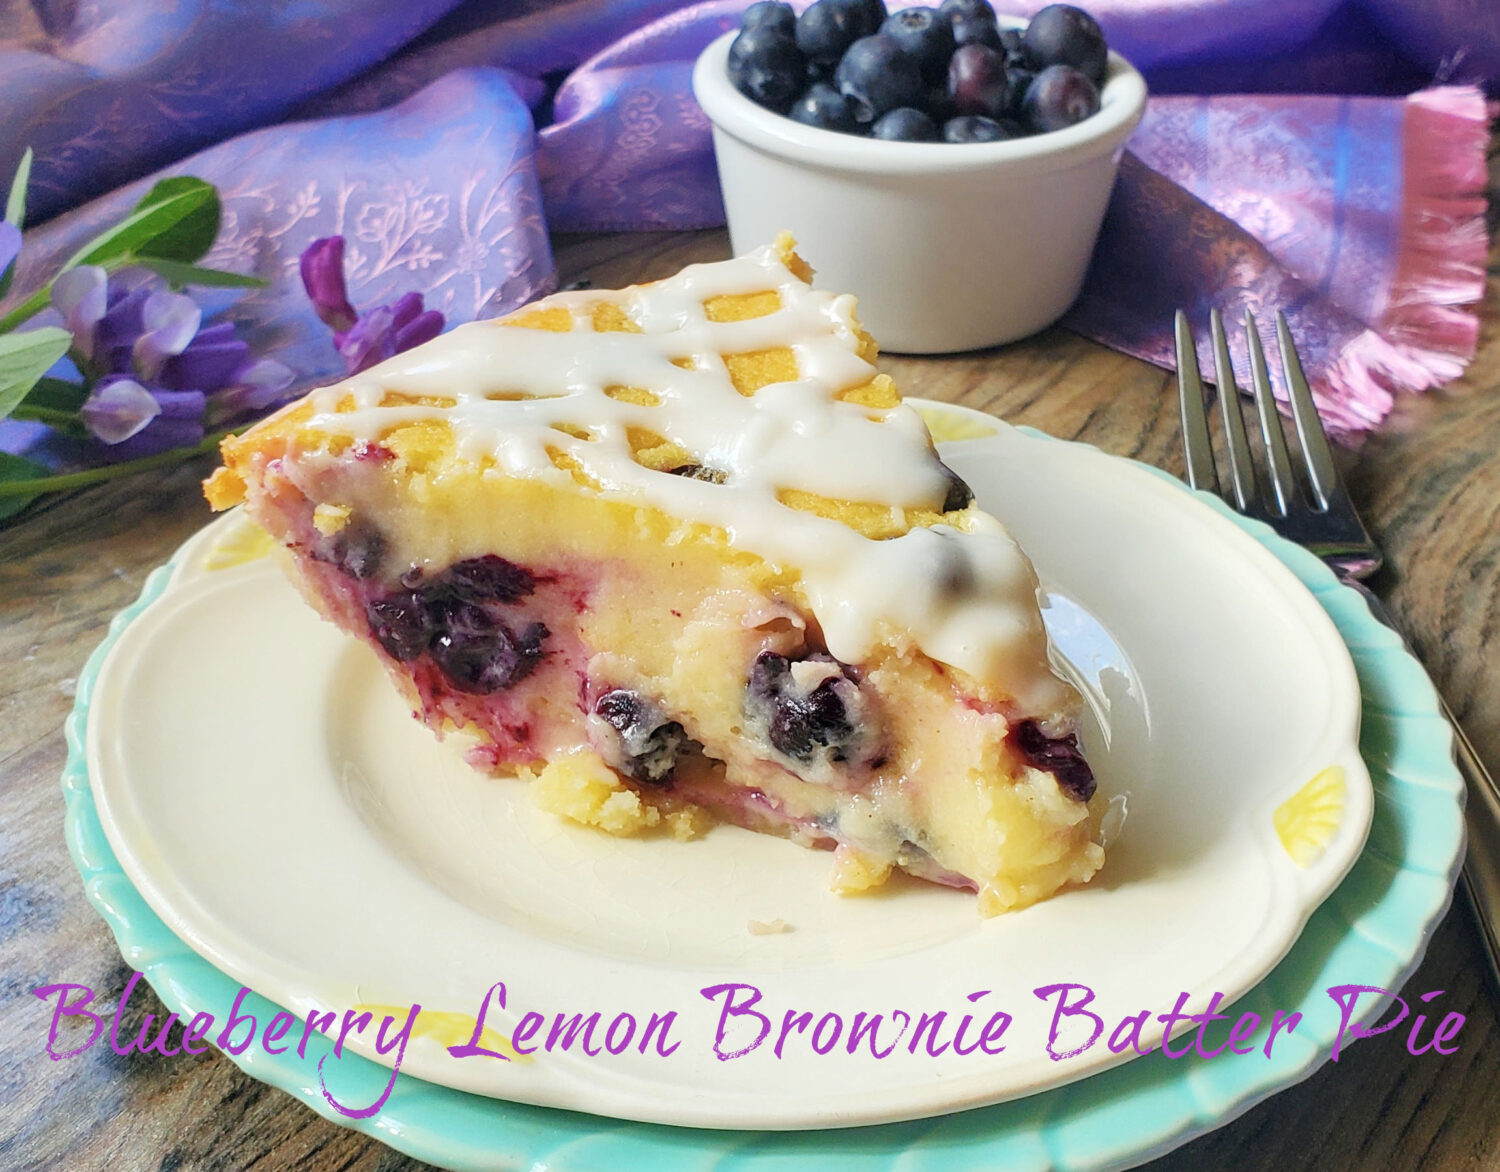 Blueberry Lemon Brownie Batter Pie; the dynamic duo of blueberries & lemon in creamy batter-like pie topped with lemon glaze.